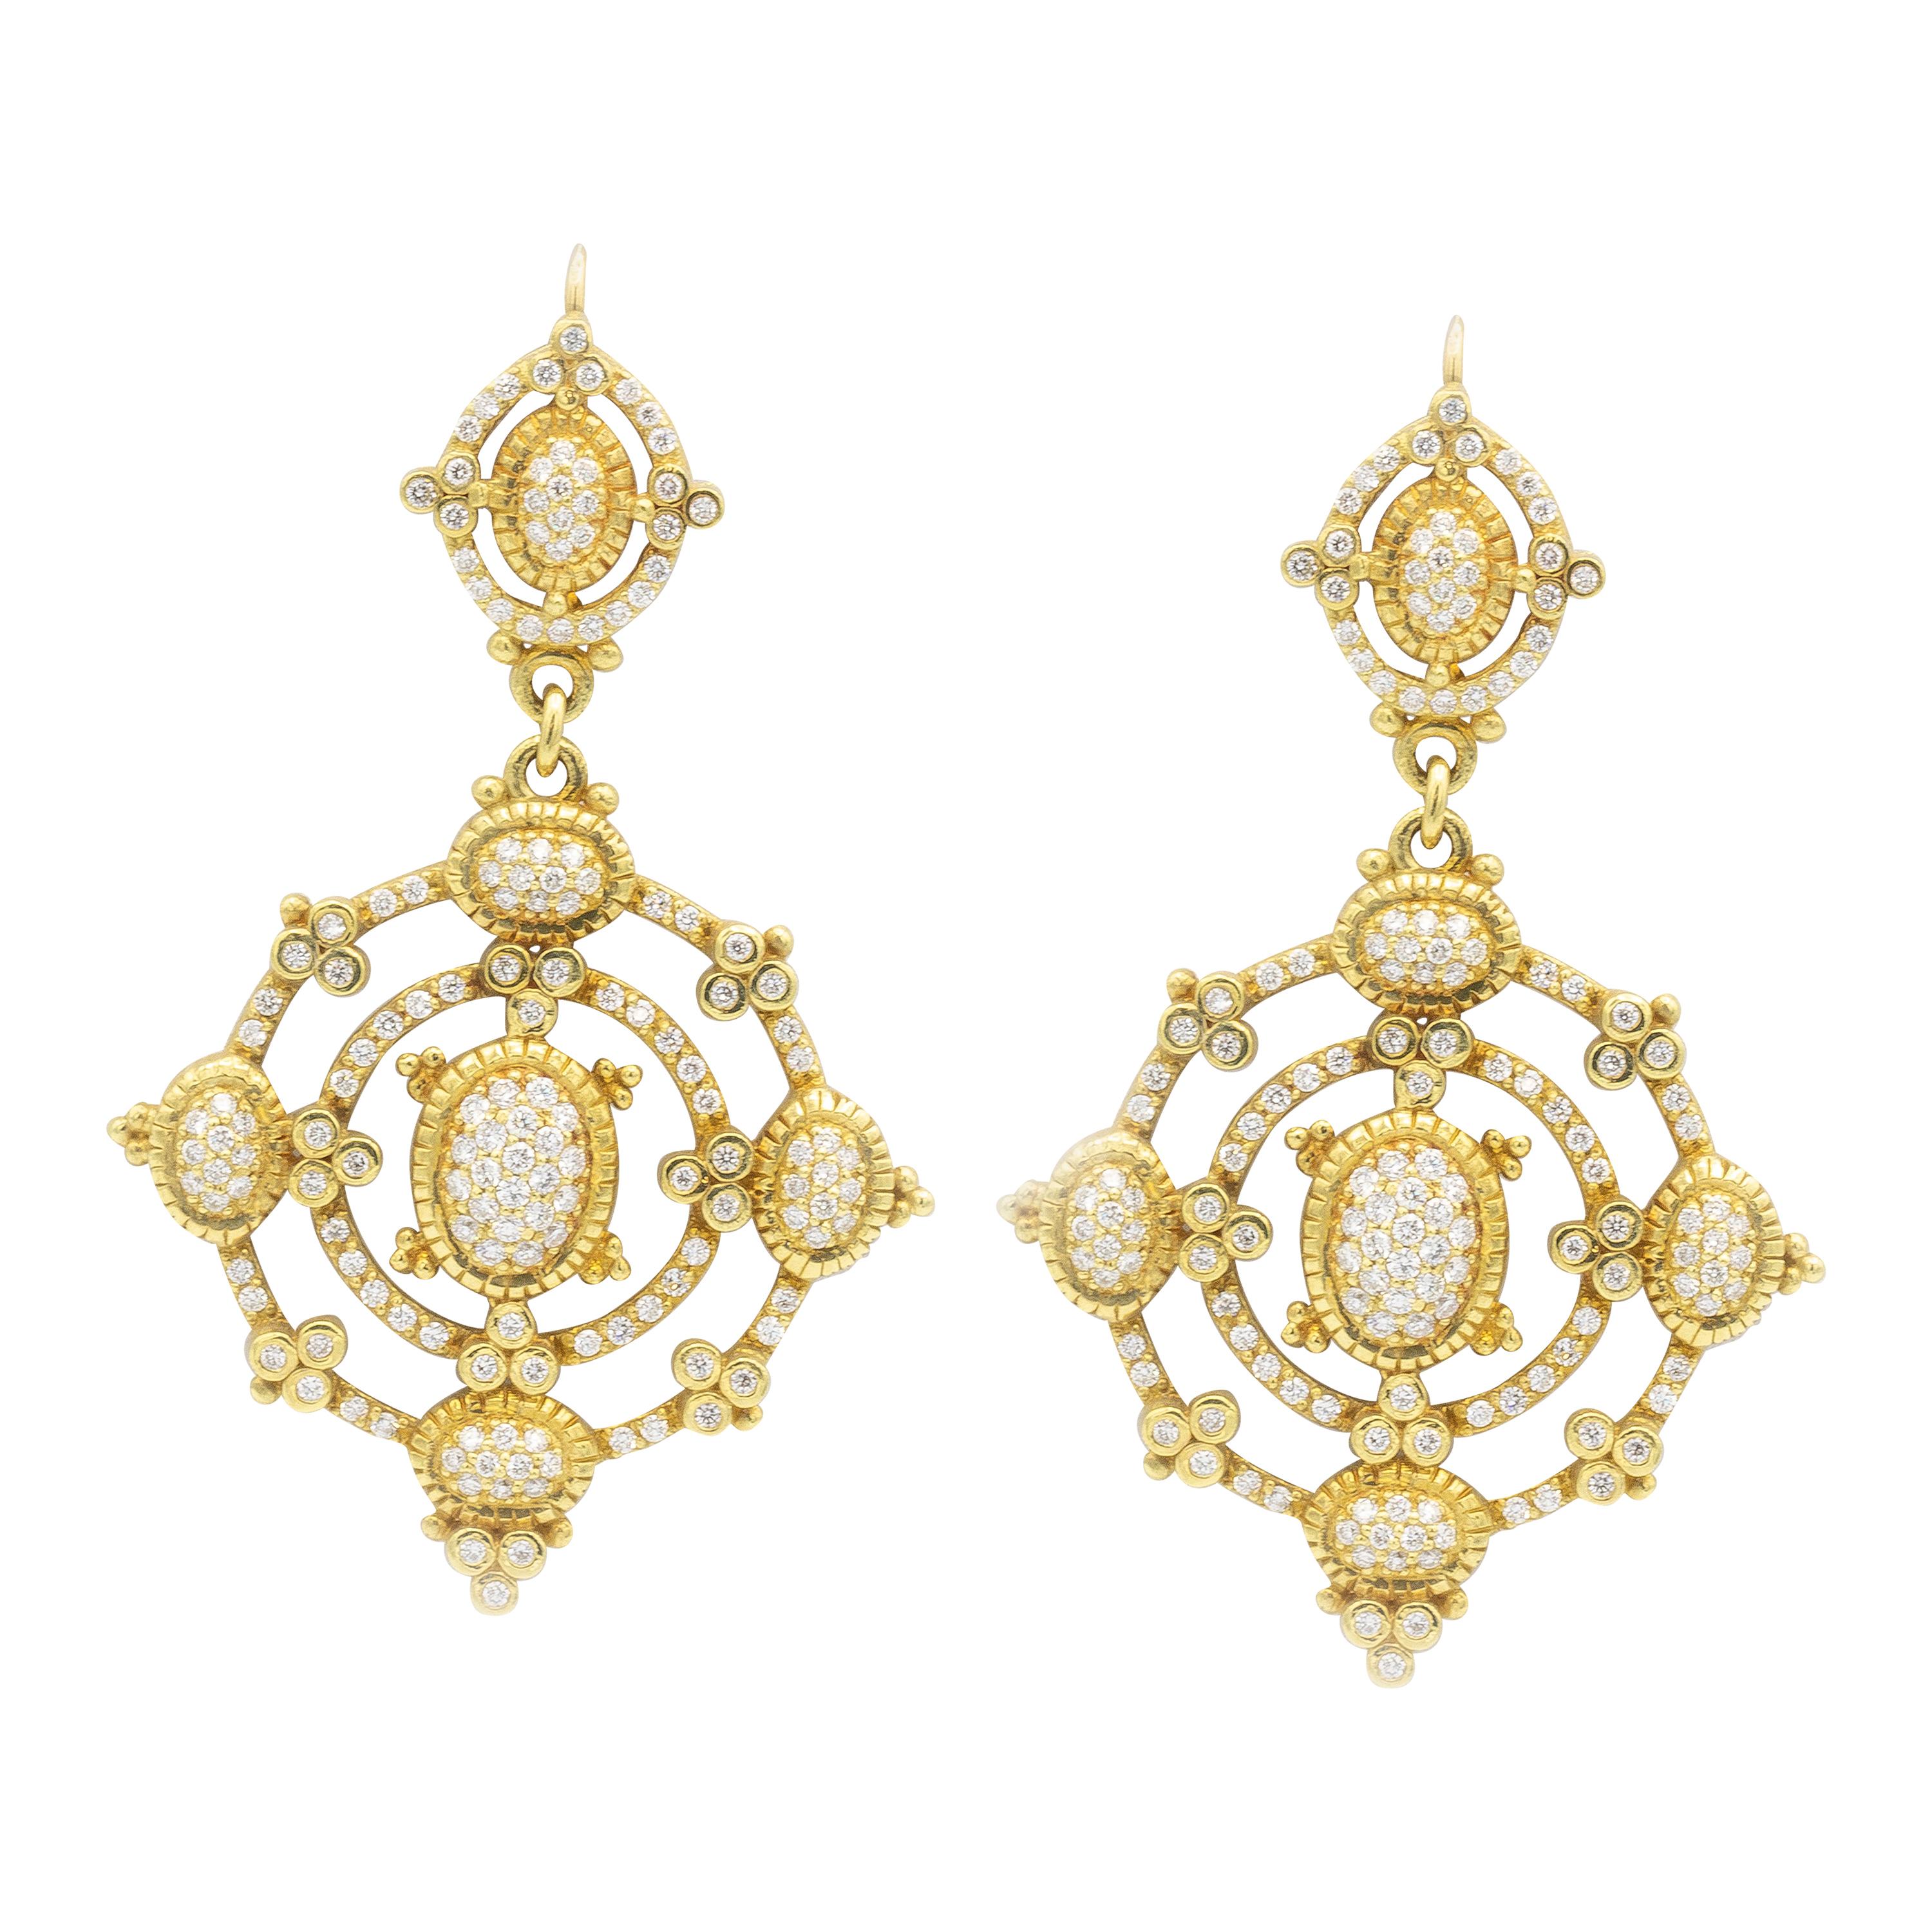 Signed Judith Ripka 4.80 Carat Diamonds 18 Karat Gold Earrings